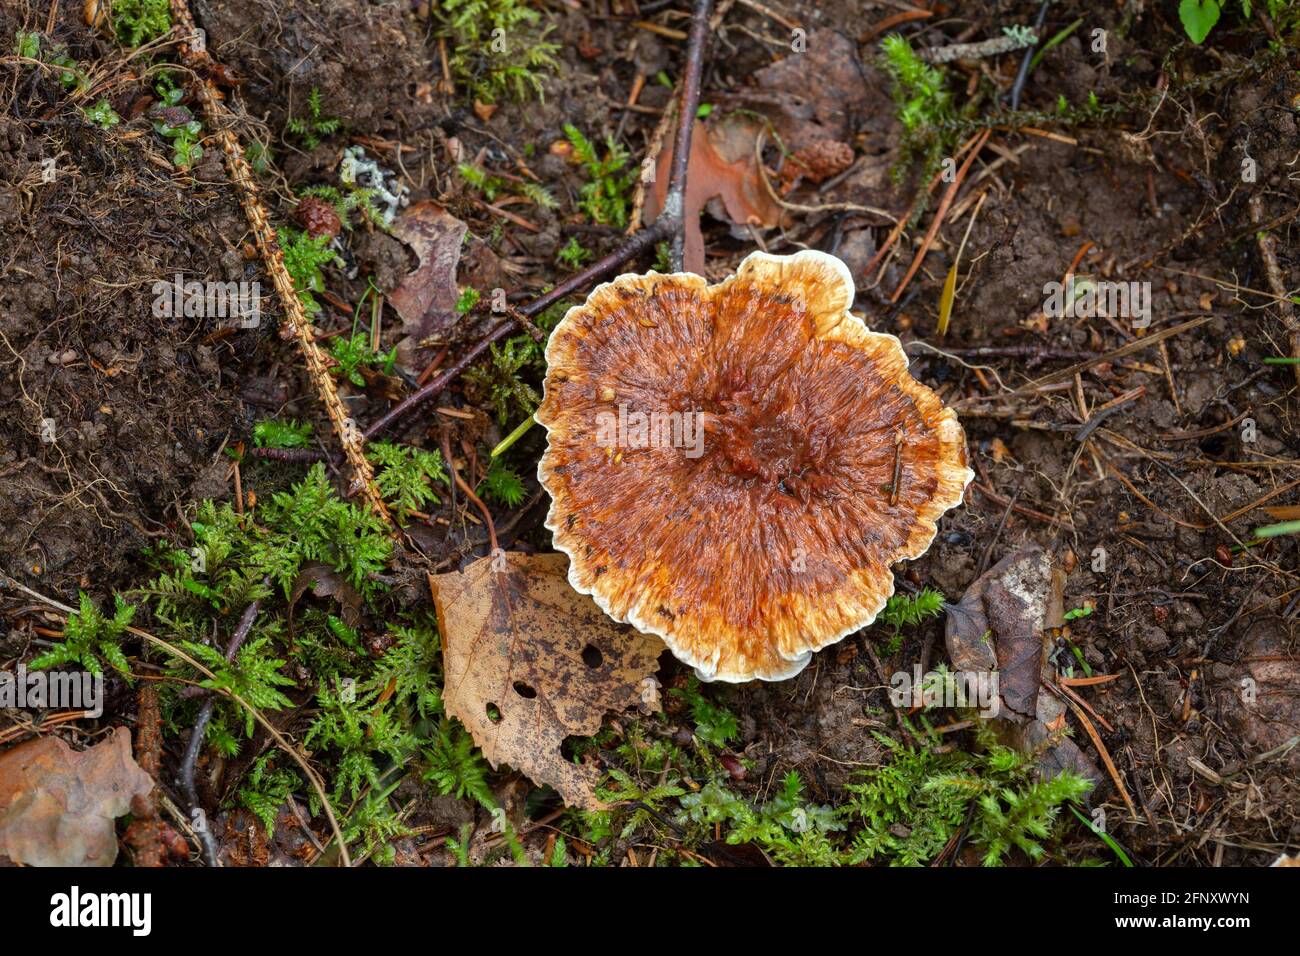 Orange spine, Hydnellum aurantiacum growing in natural environment Stock Photo